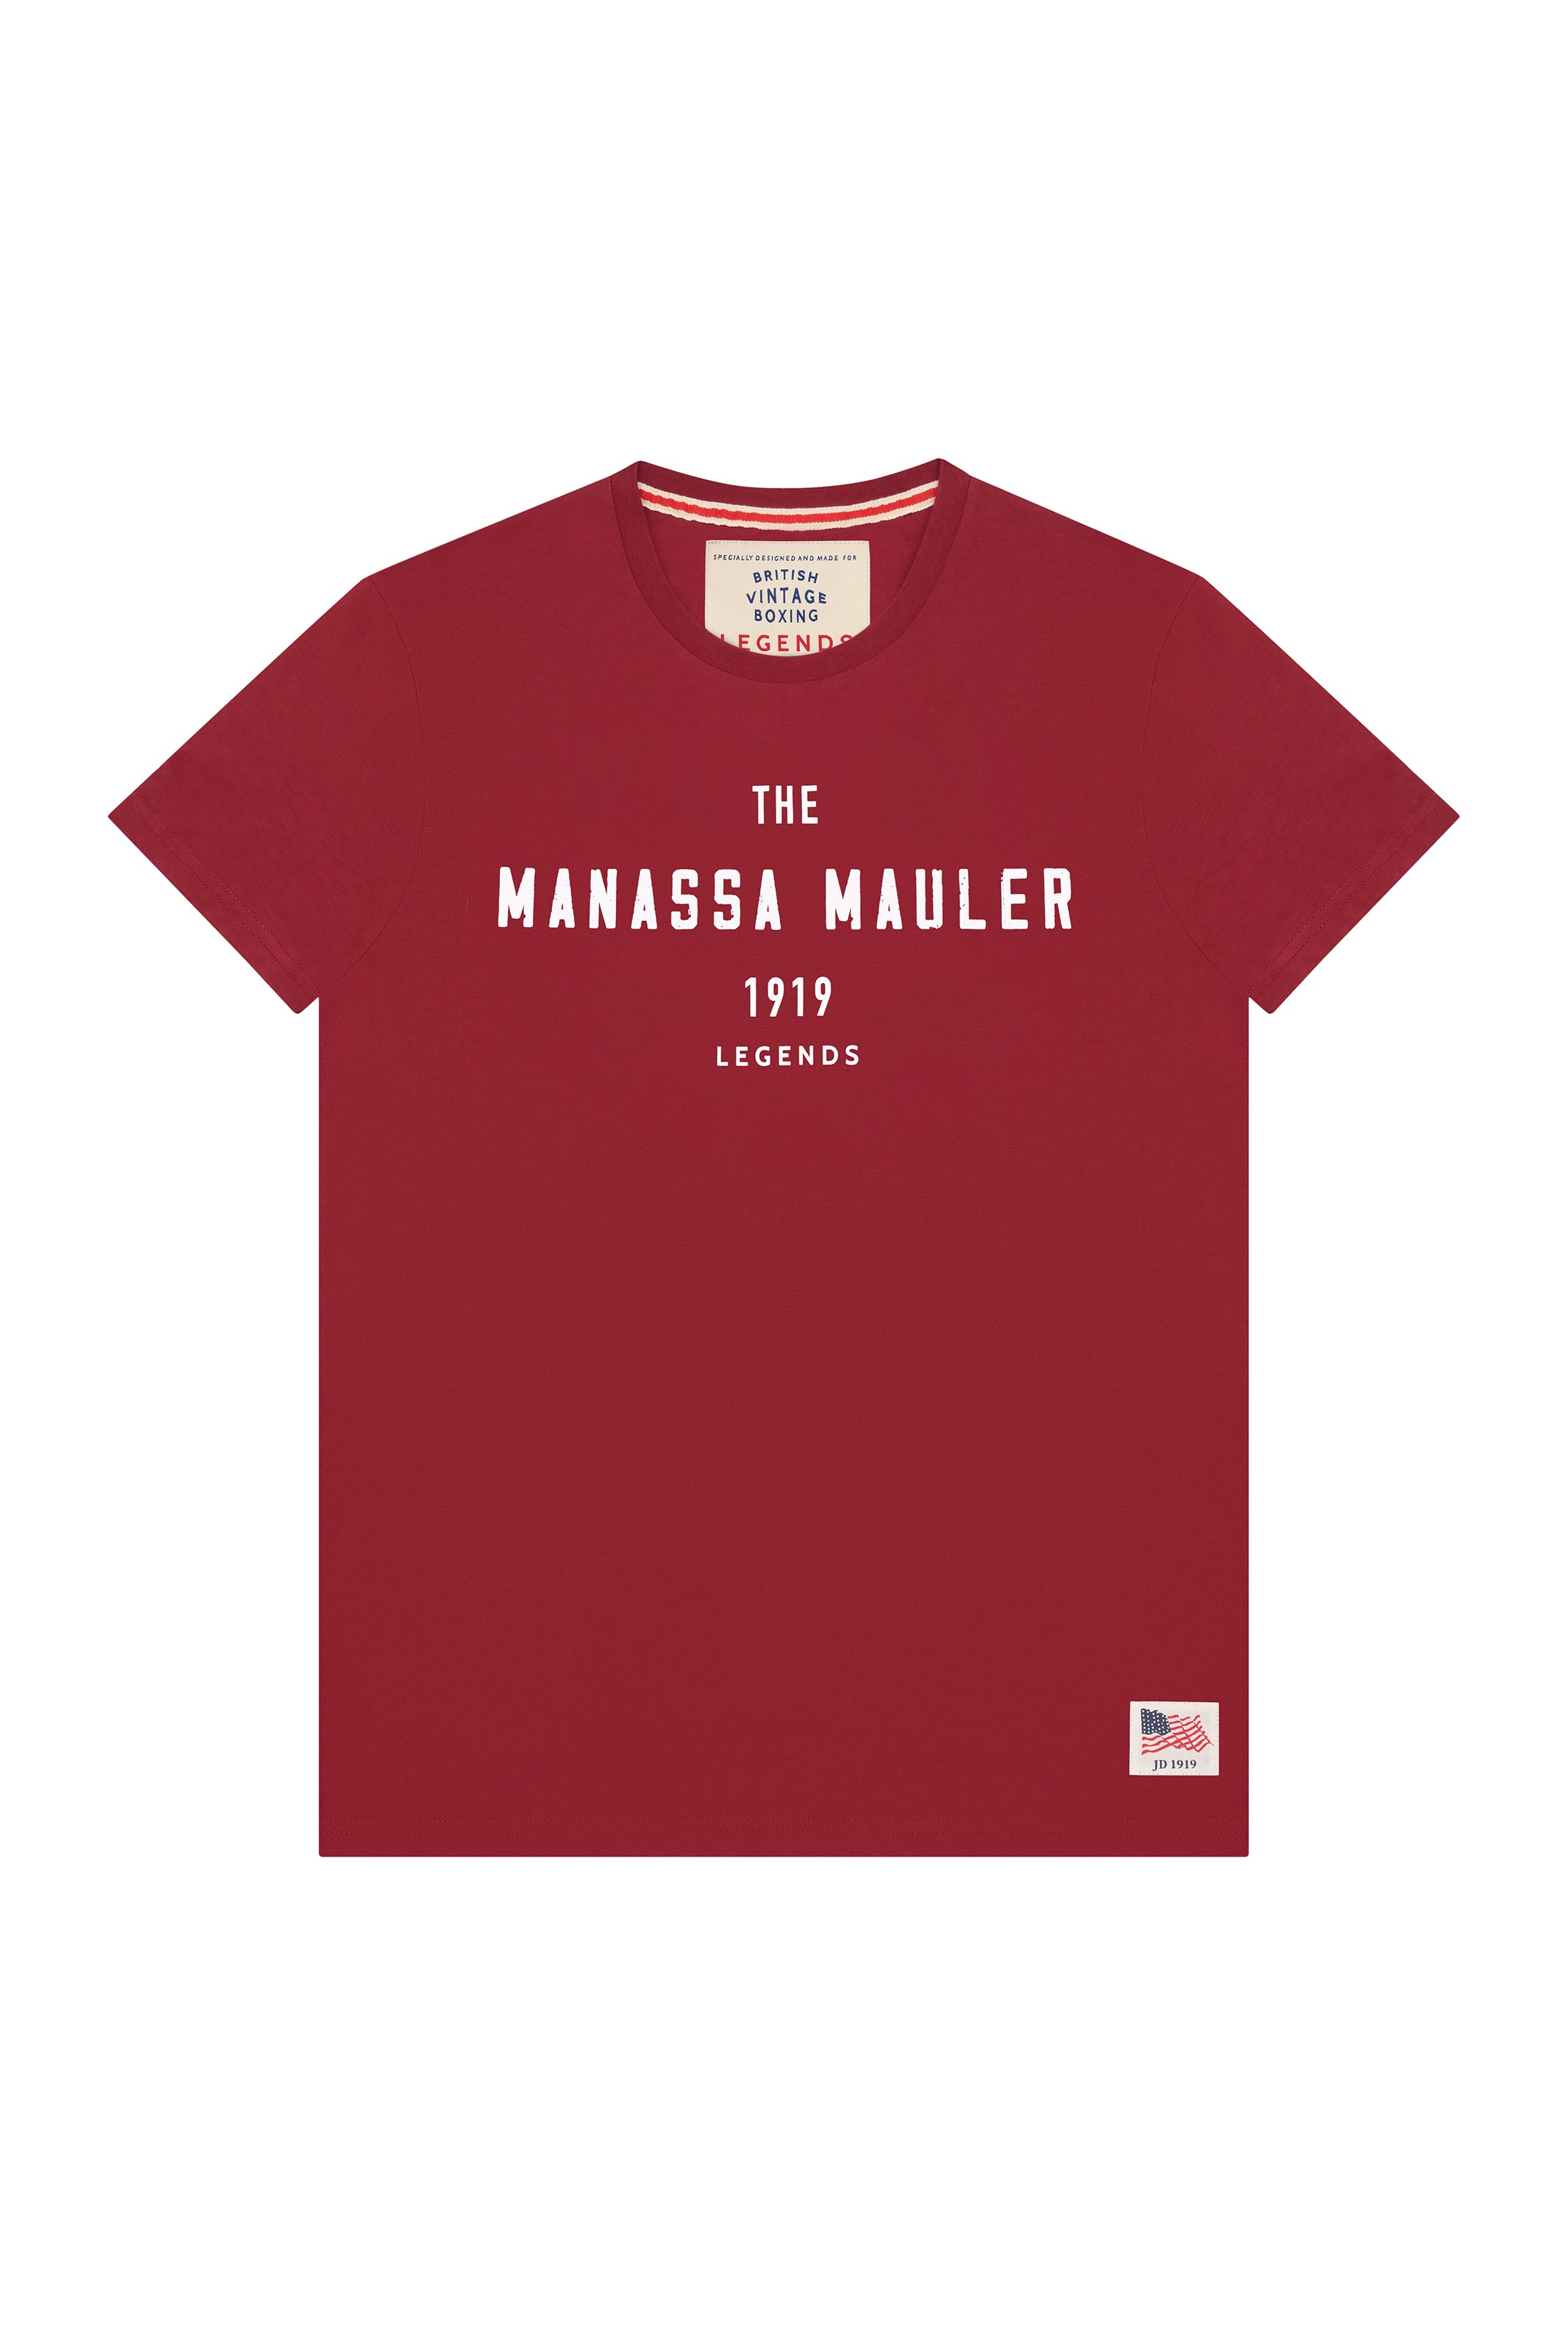 THE MANASSA MAULER T-SHIRT